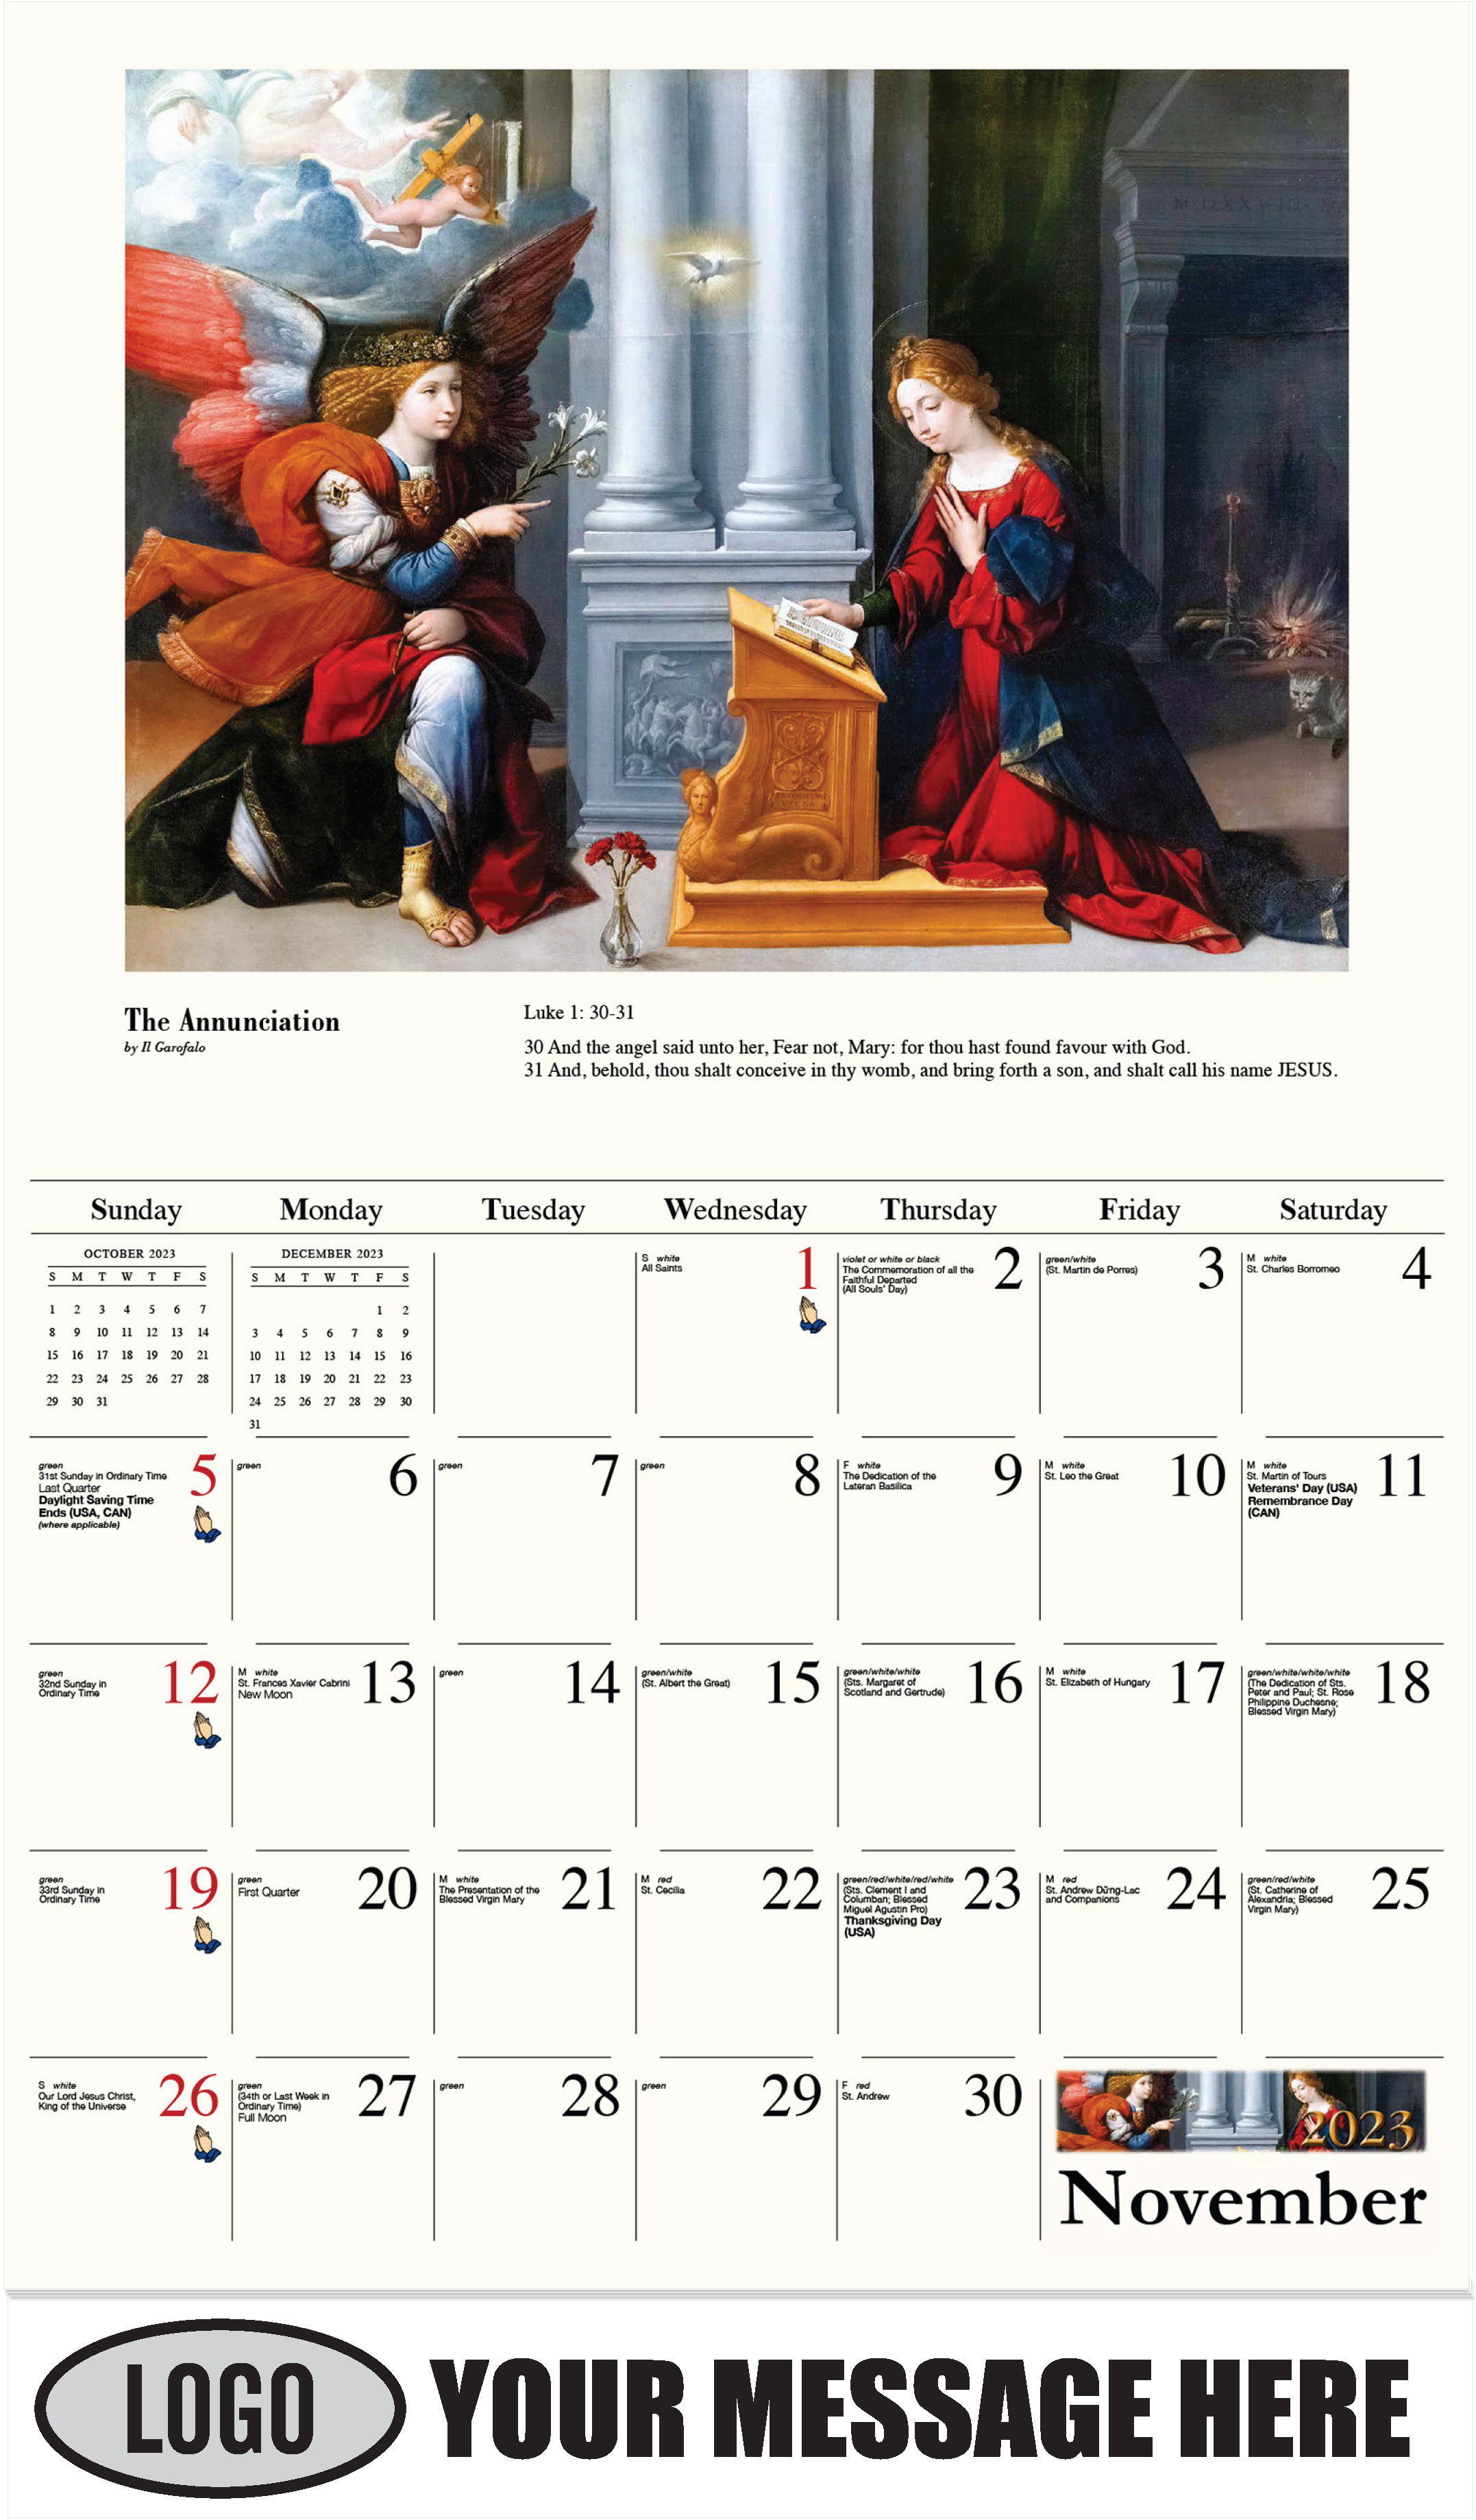 November - Catholic Inspiration 2023 Promotional Calendar